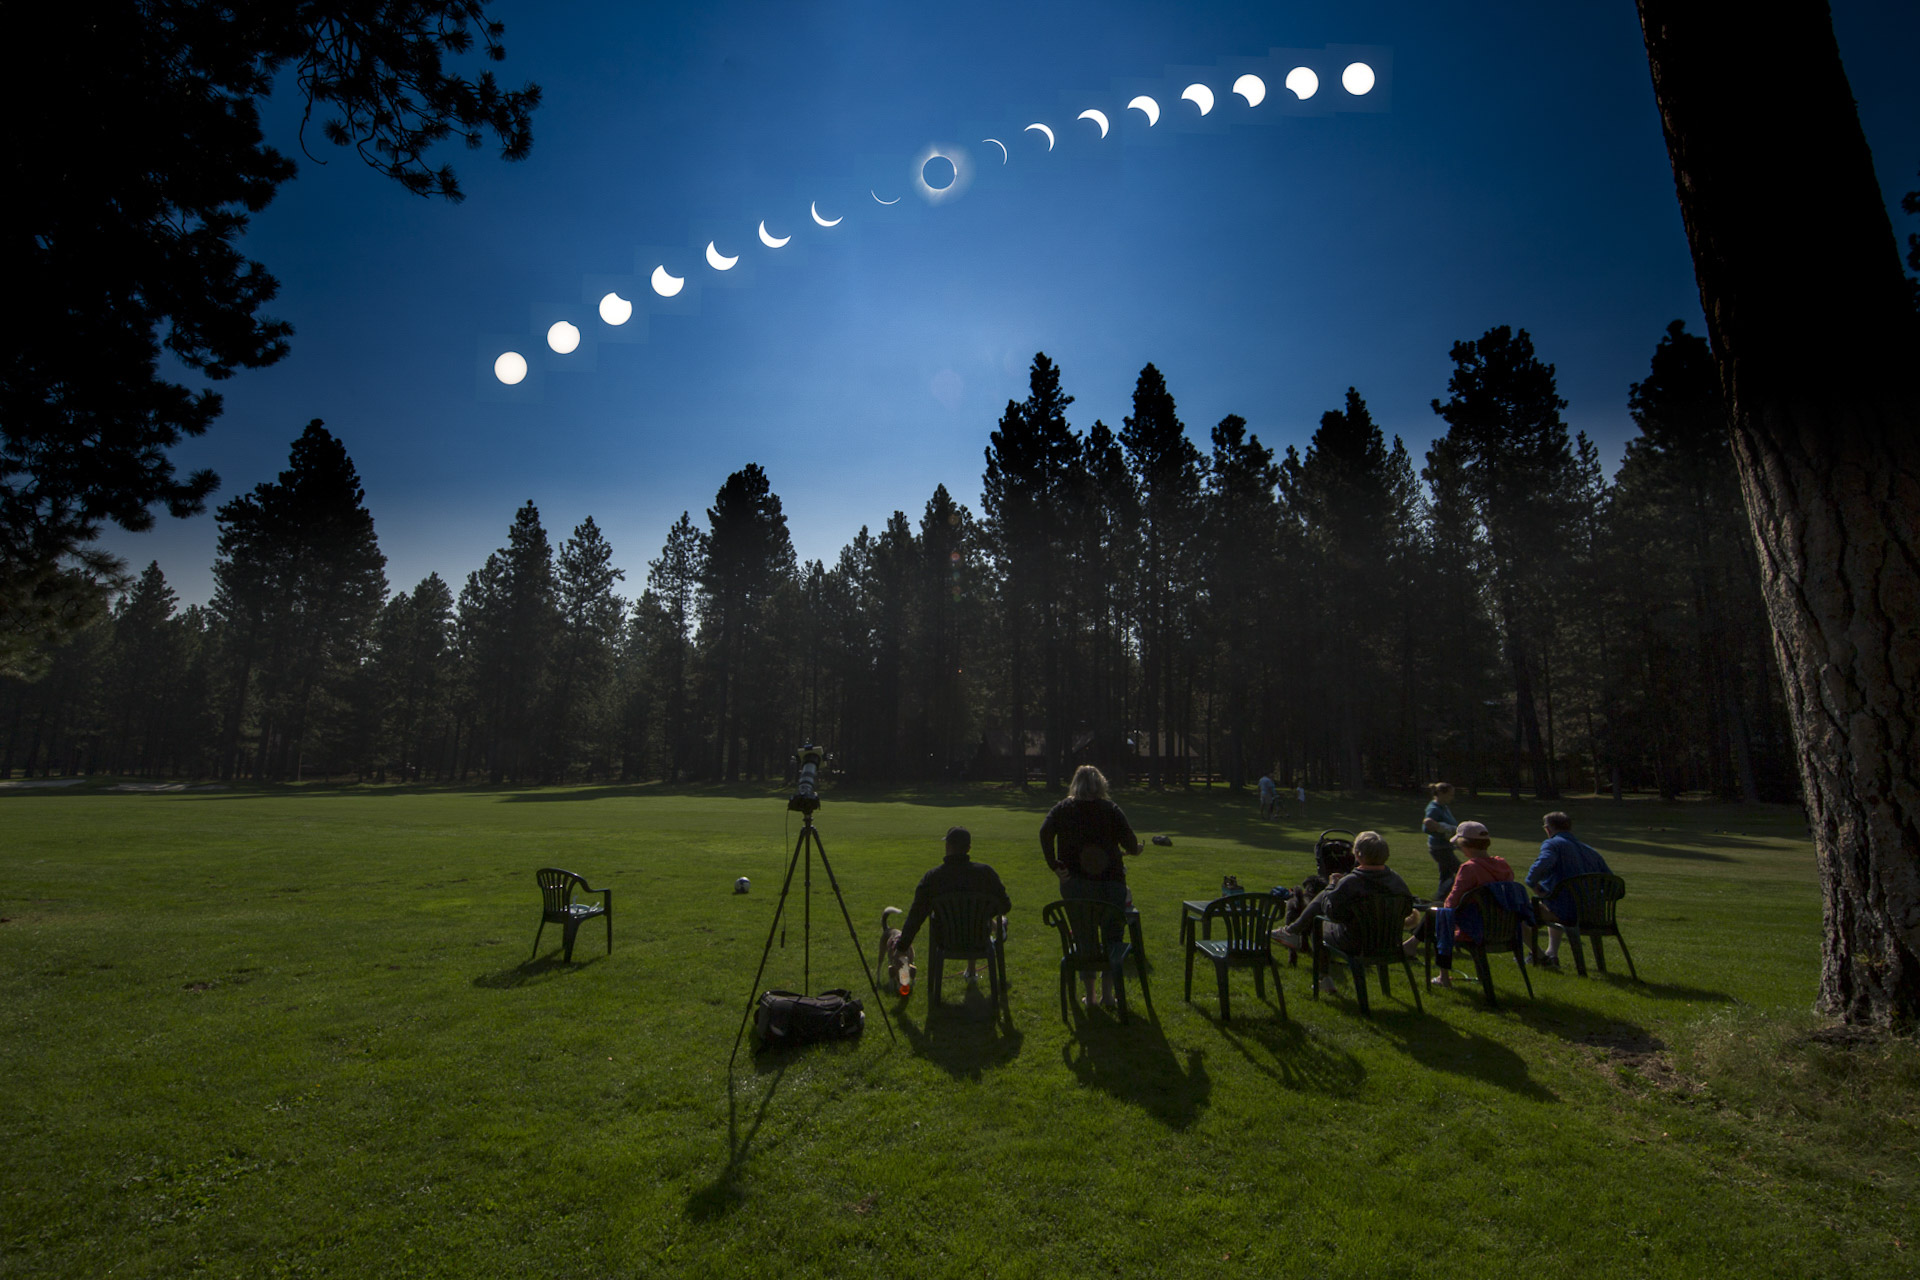 Black Butte Ranch eclipse viewing site